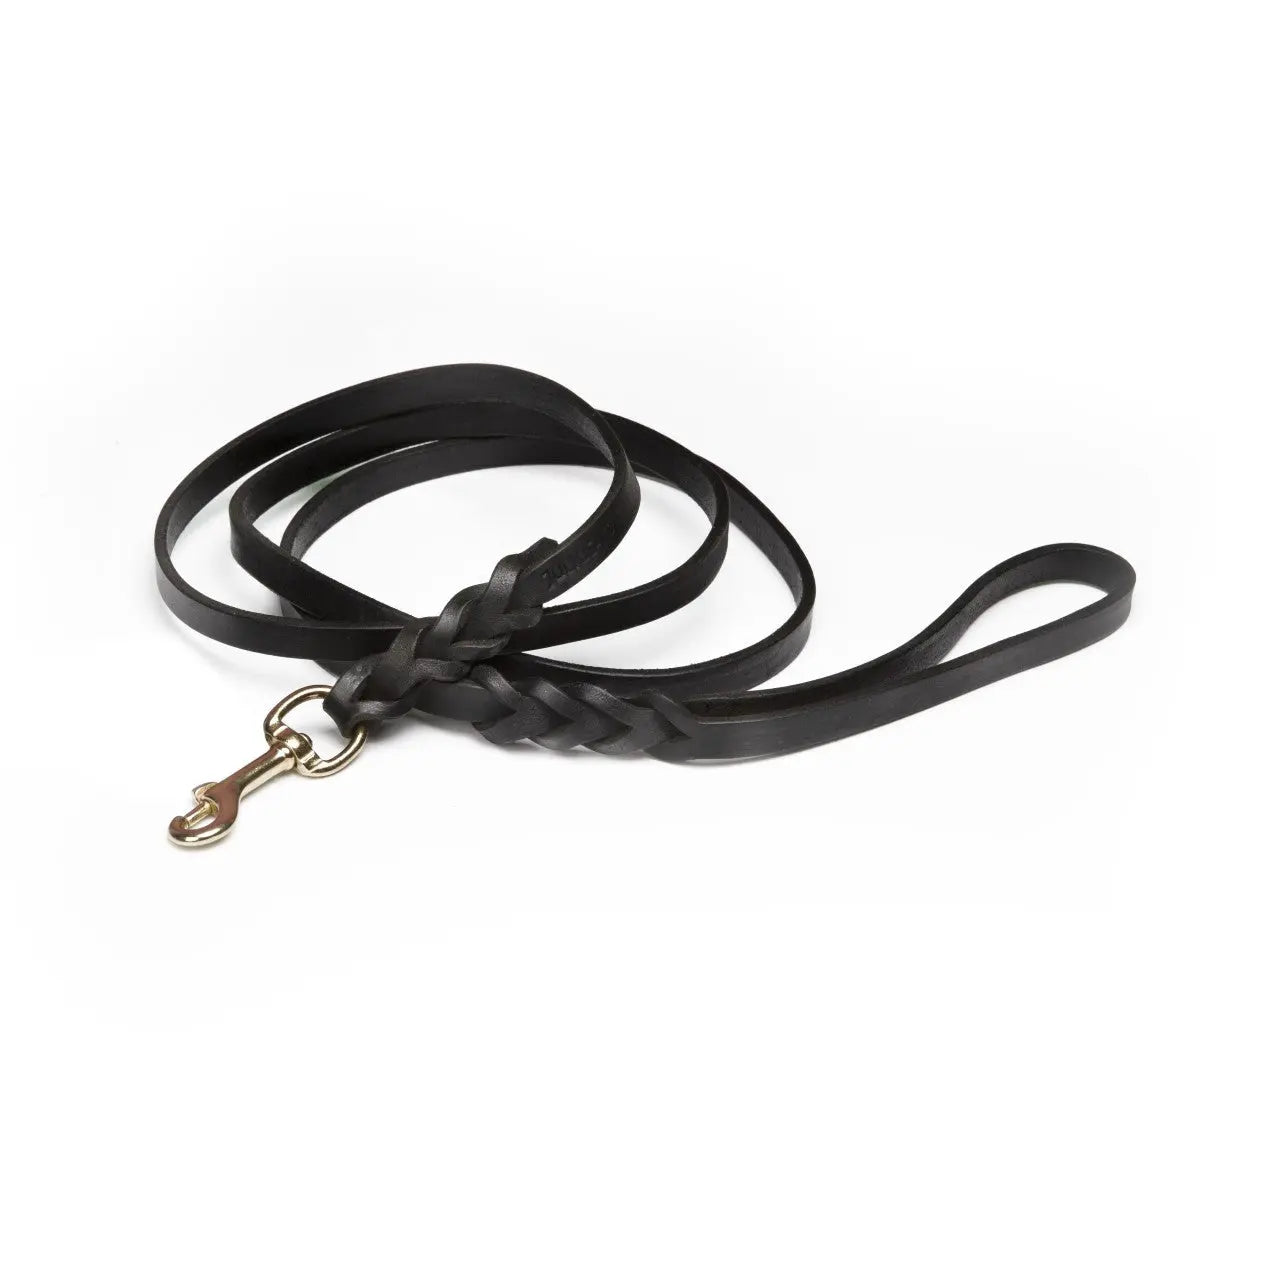 Leather K-9 6ft leash with handle, Brass Carabiner - Julius-K9 LLC